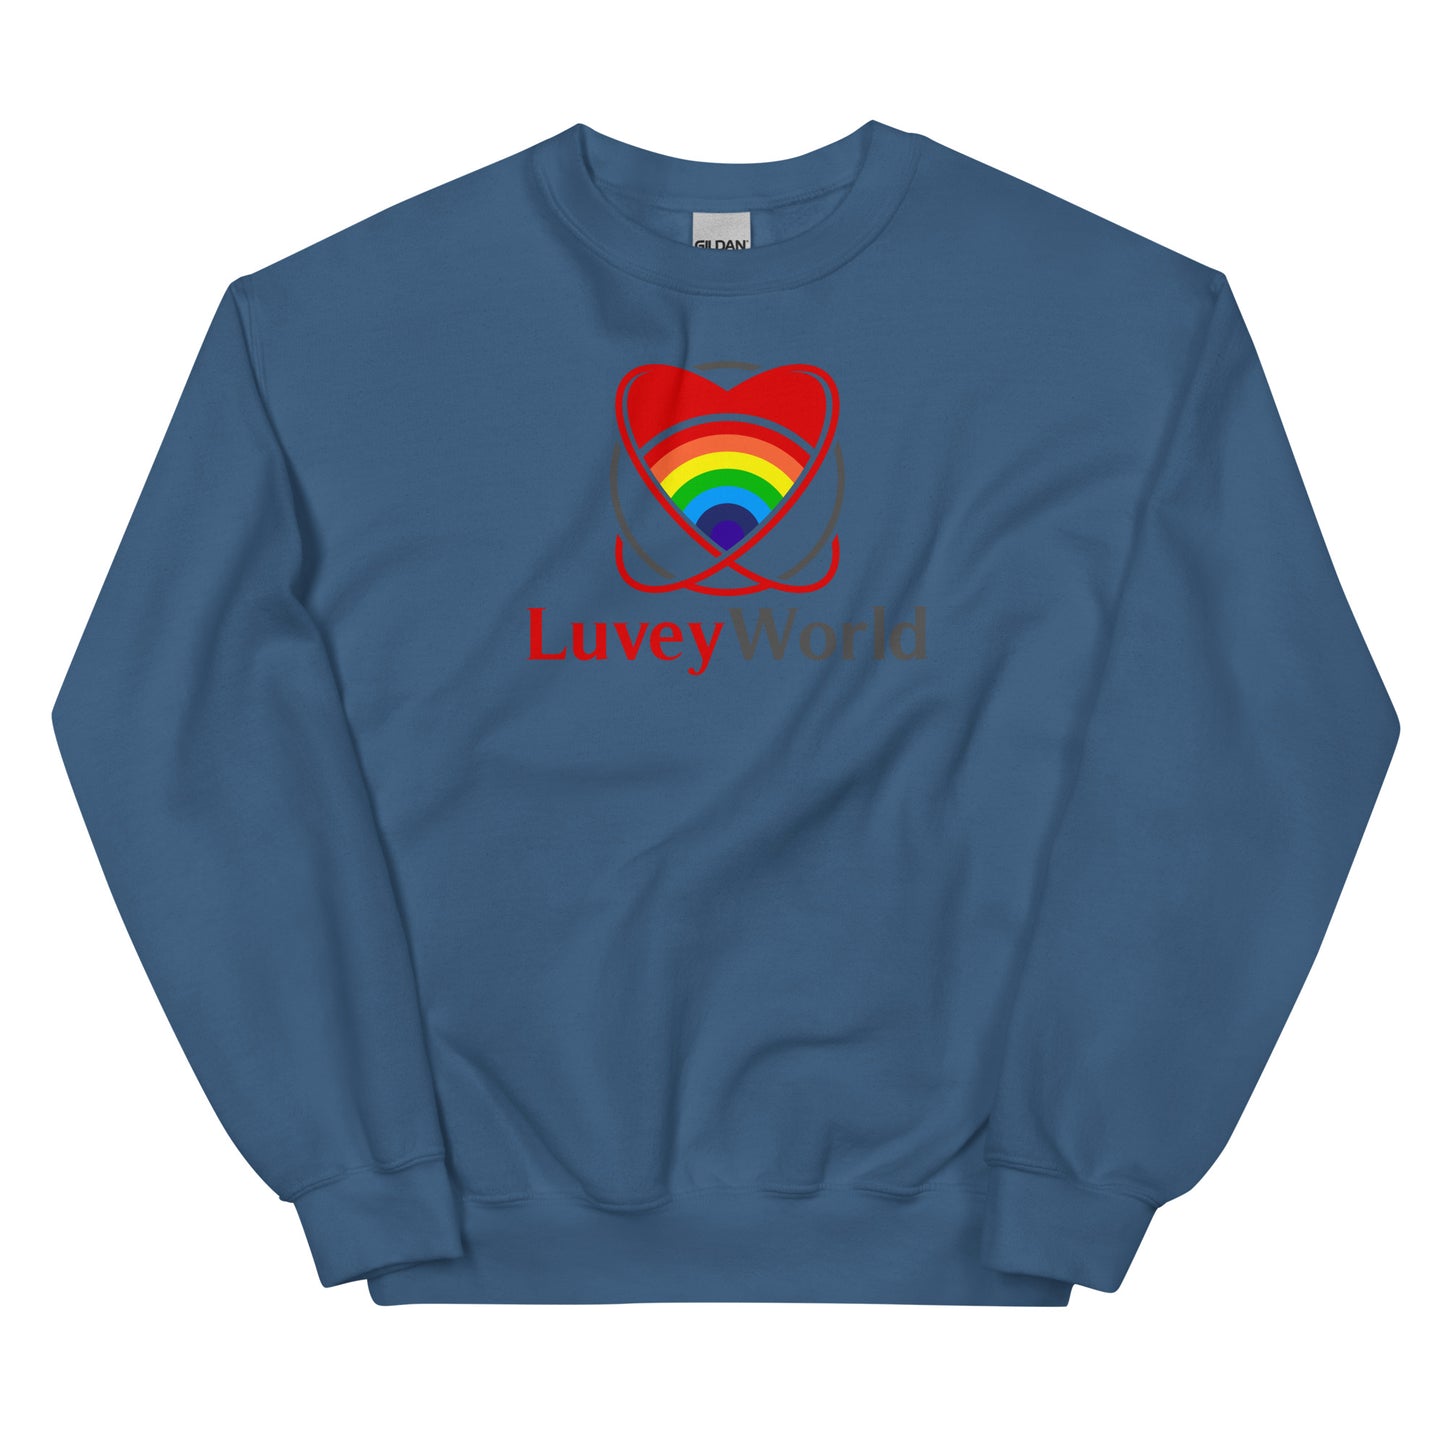 LuveyWorld Super Sweatshirt